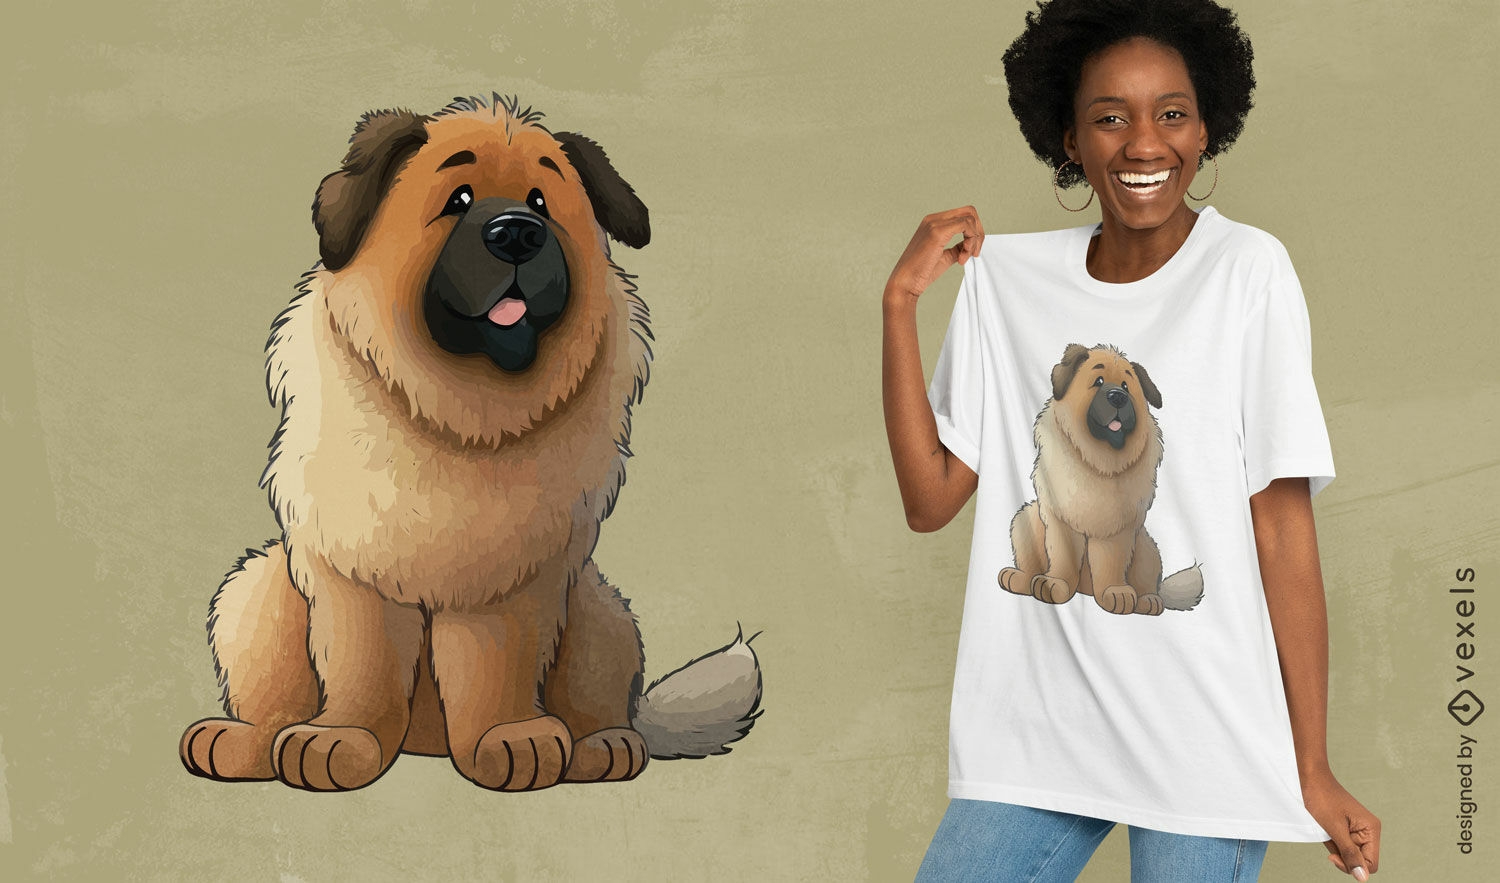 Germanic bear dog t-shirt design